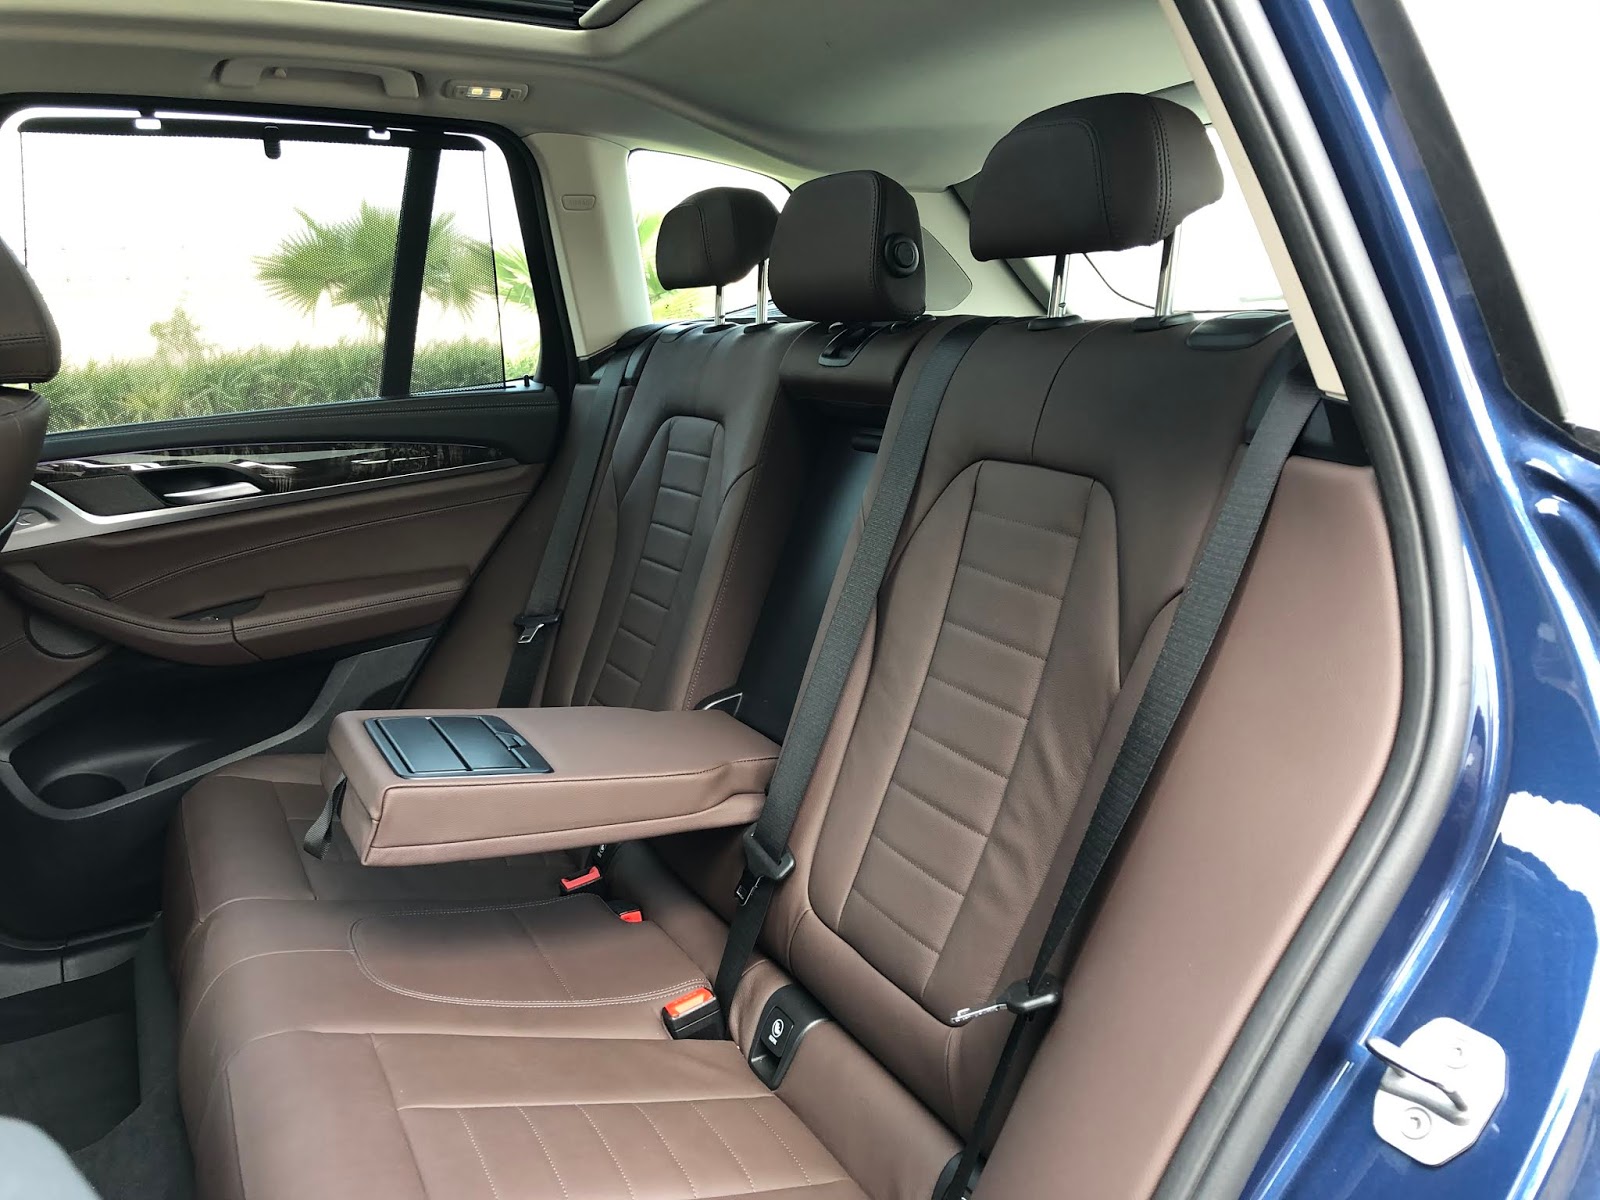 The BMW X3 xDrive20d interiors